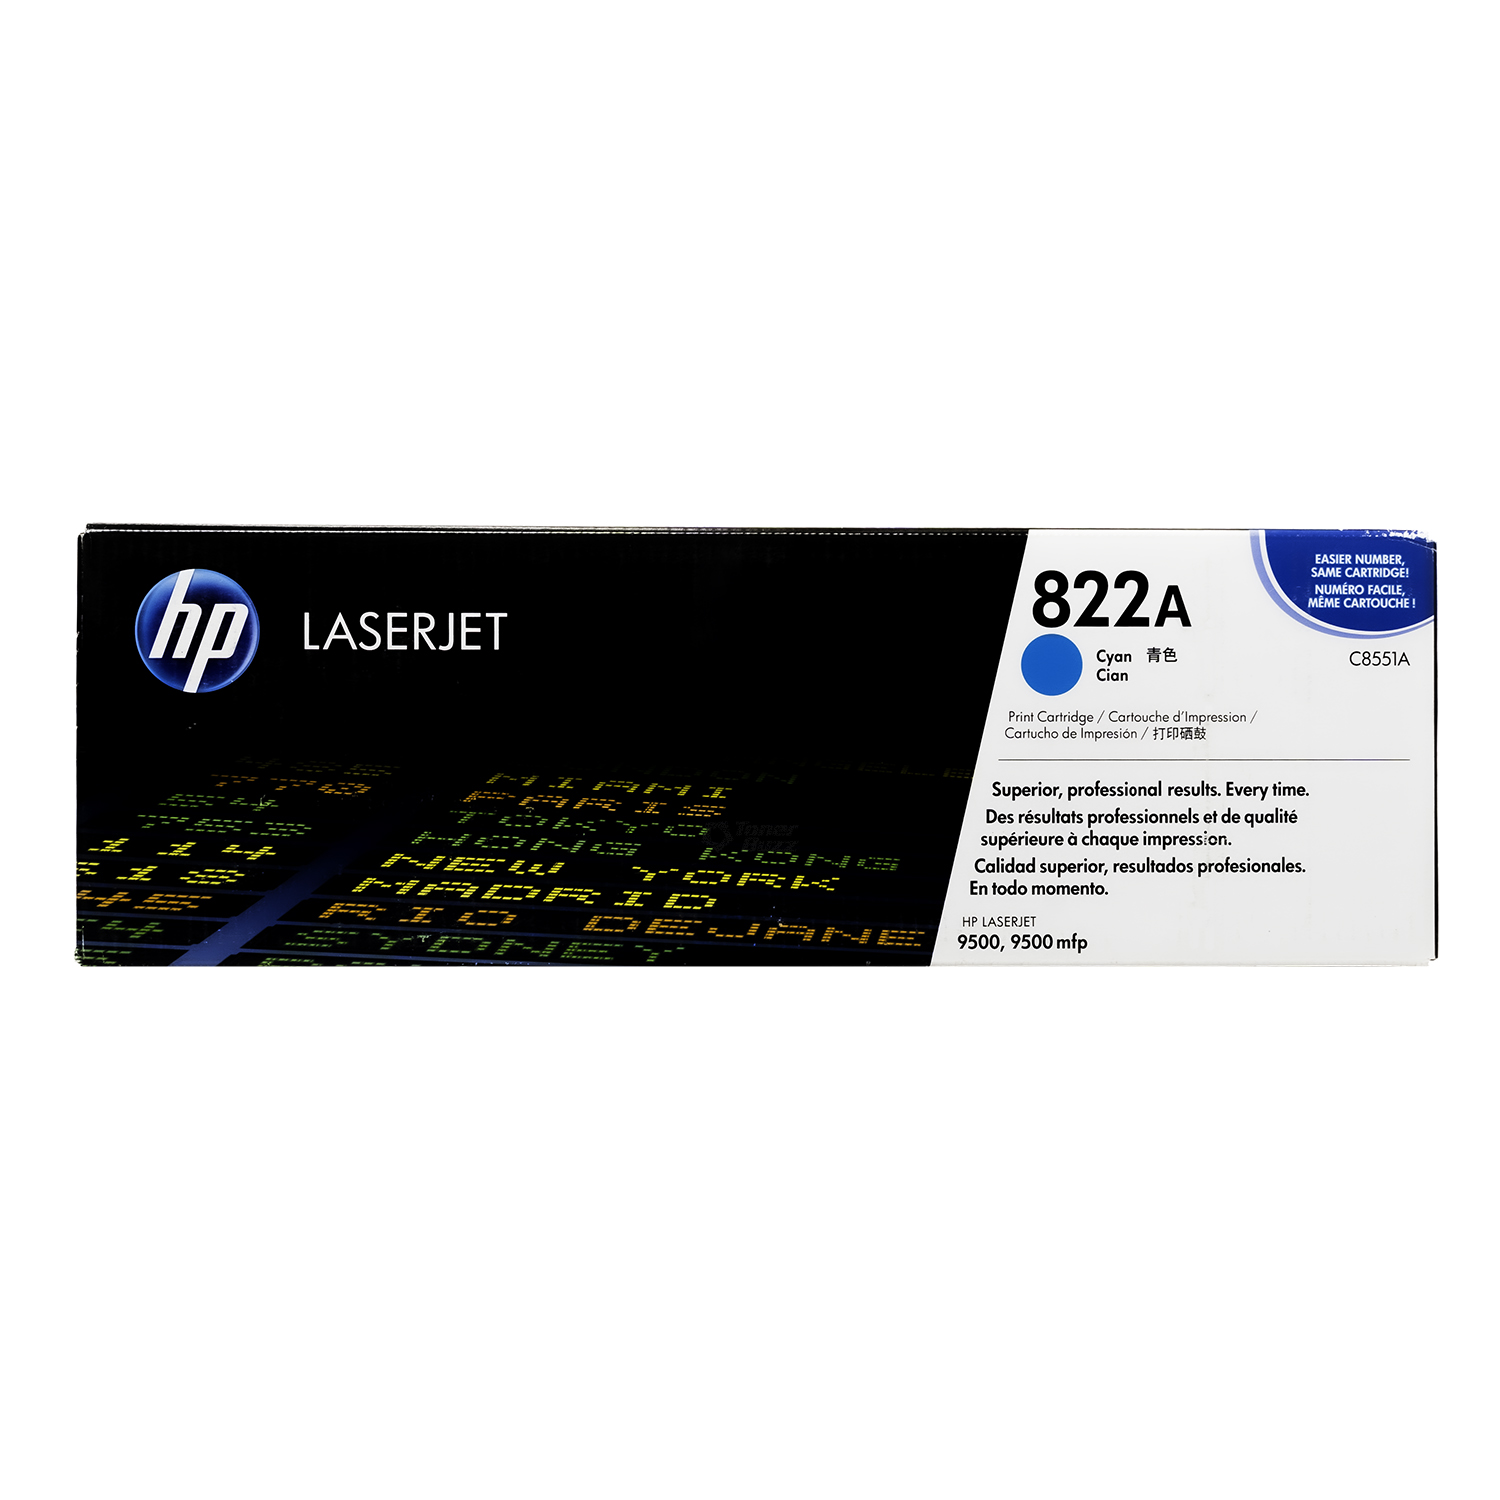 C8551A | HP 822A | Original HP LaserJet Toner Cartridge - Cyan